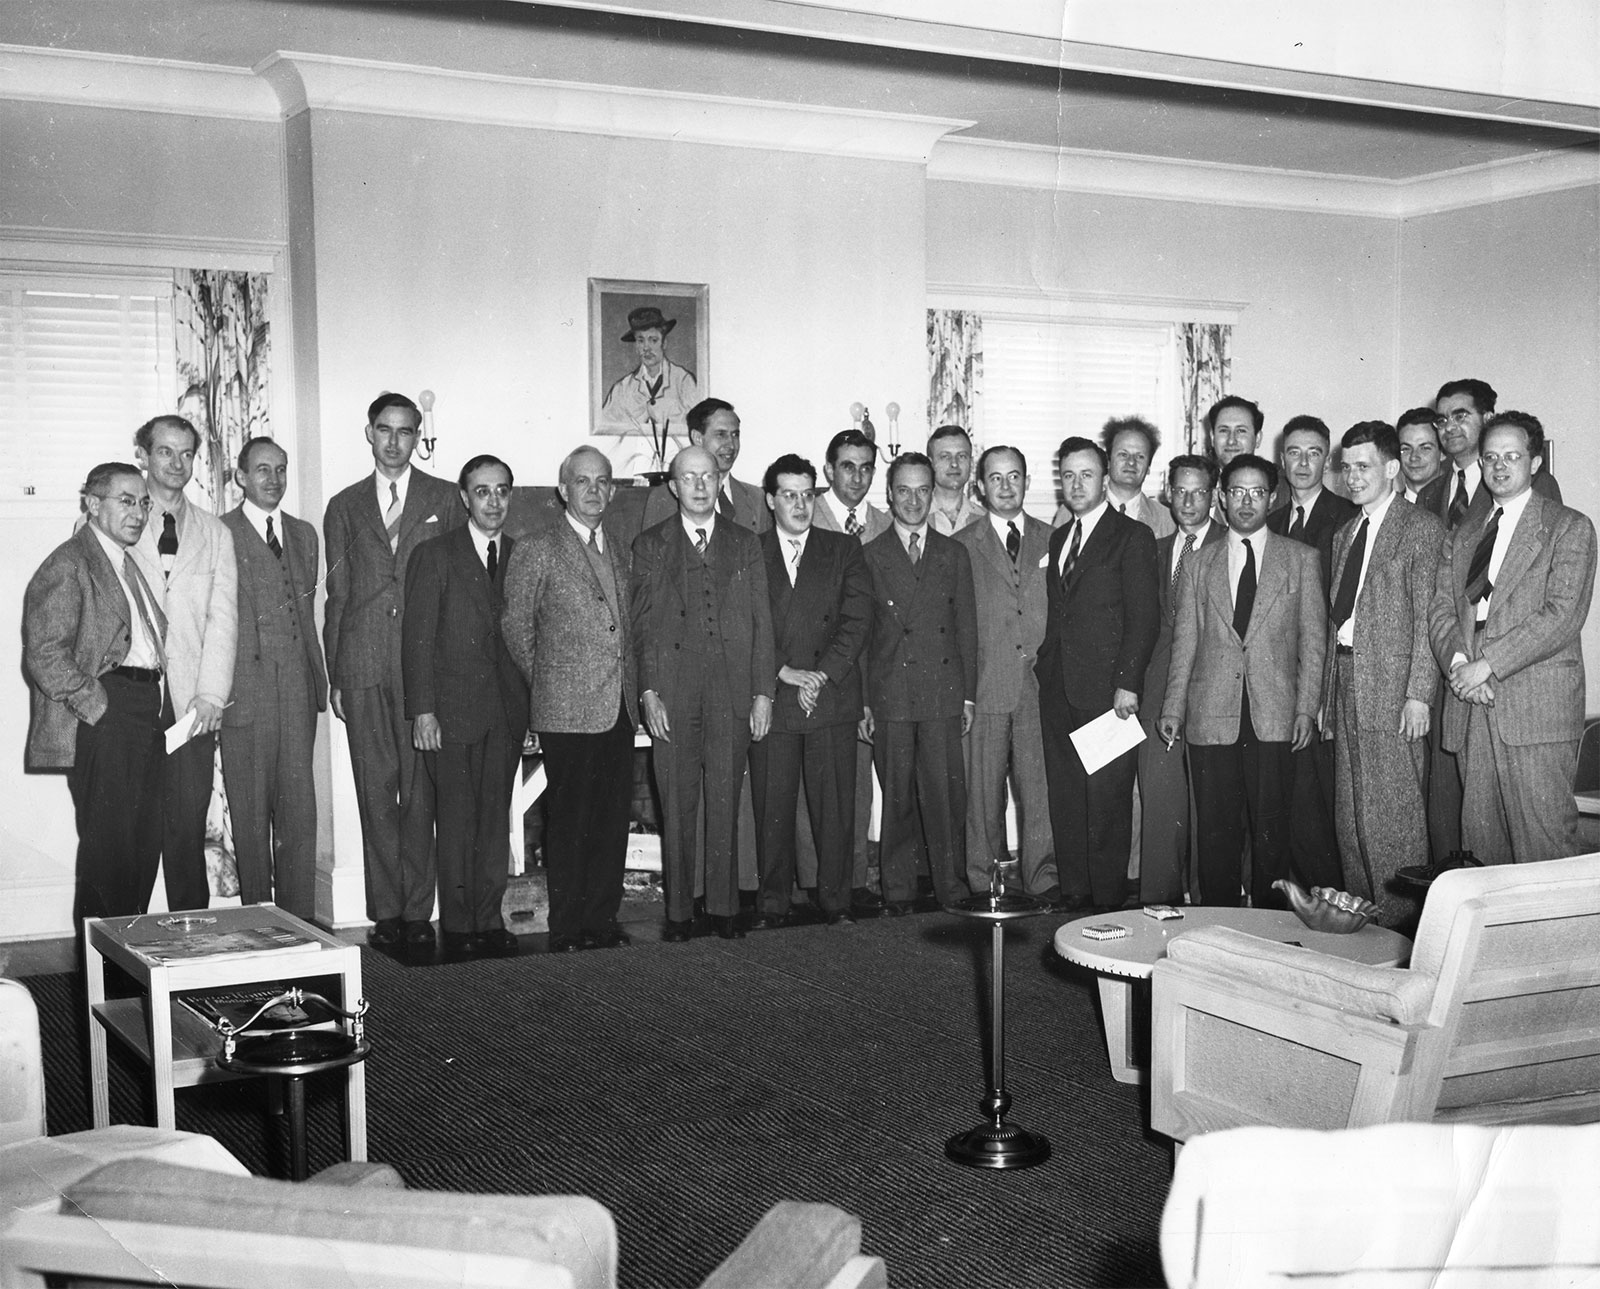 Participants at the 1947 Shelter Island Conference on Quantum Mechanics (left to right): I.I. Rabi; Linus Pauling; J. Van Vleck; W.E. Lamb; Gregory Breit; D. MacInnes; K.K. Darrow; G.E. Uhlenbeck; Julian Schwinger; Edward Teller; Bruno Rossi; Arnold Nordsieck; John von Neumann; John A. Wheeler; Hans A. Bethe; R. Serber; R.E. Marshak; Abraham Pais; J. Robert Oppenheimer; David Bohm; Richard P. Feynman; Victor F. Weisskopf; Herman Feshbach. Not pictured: H.A. Kramers.